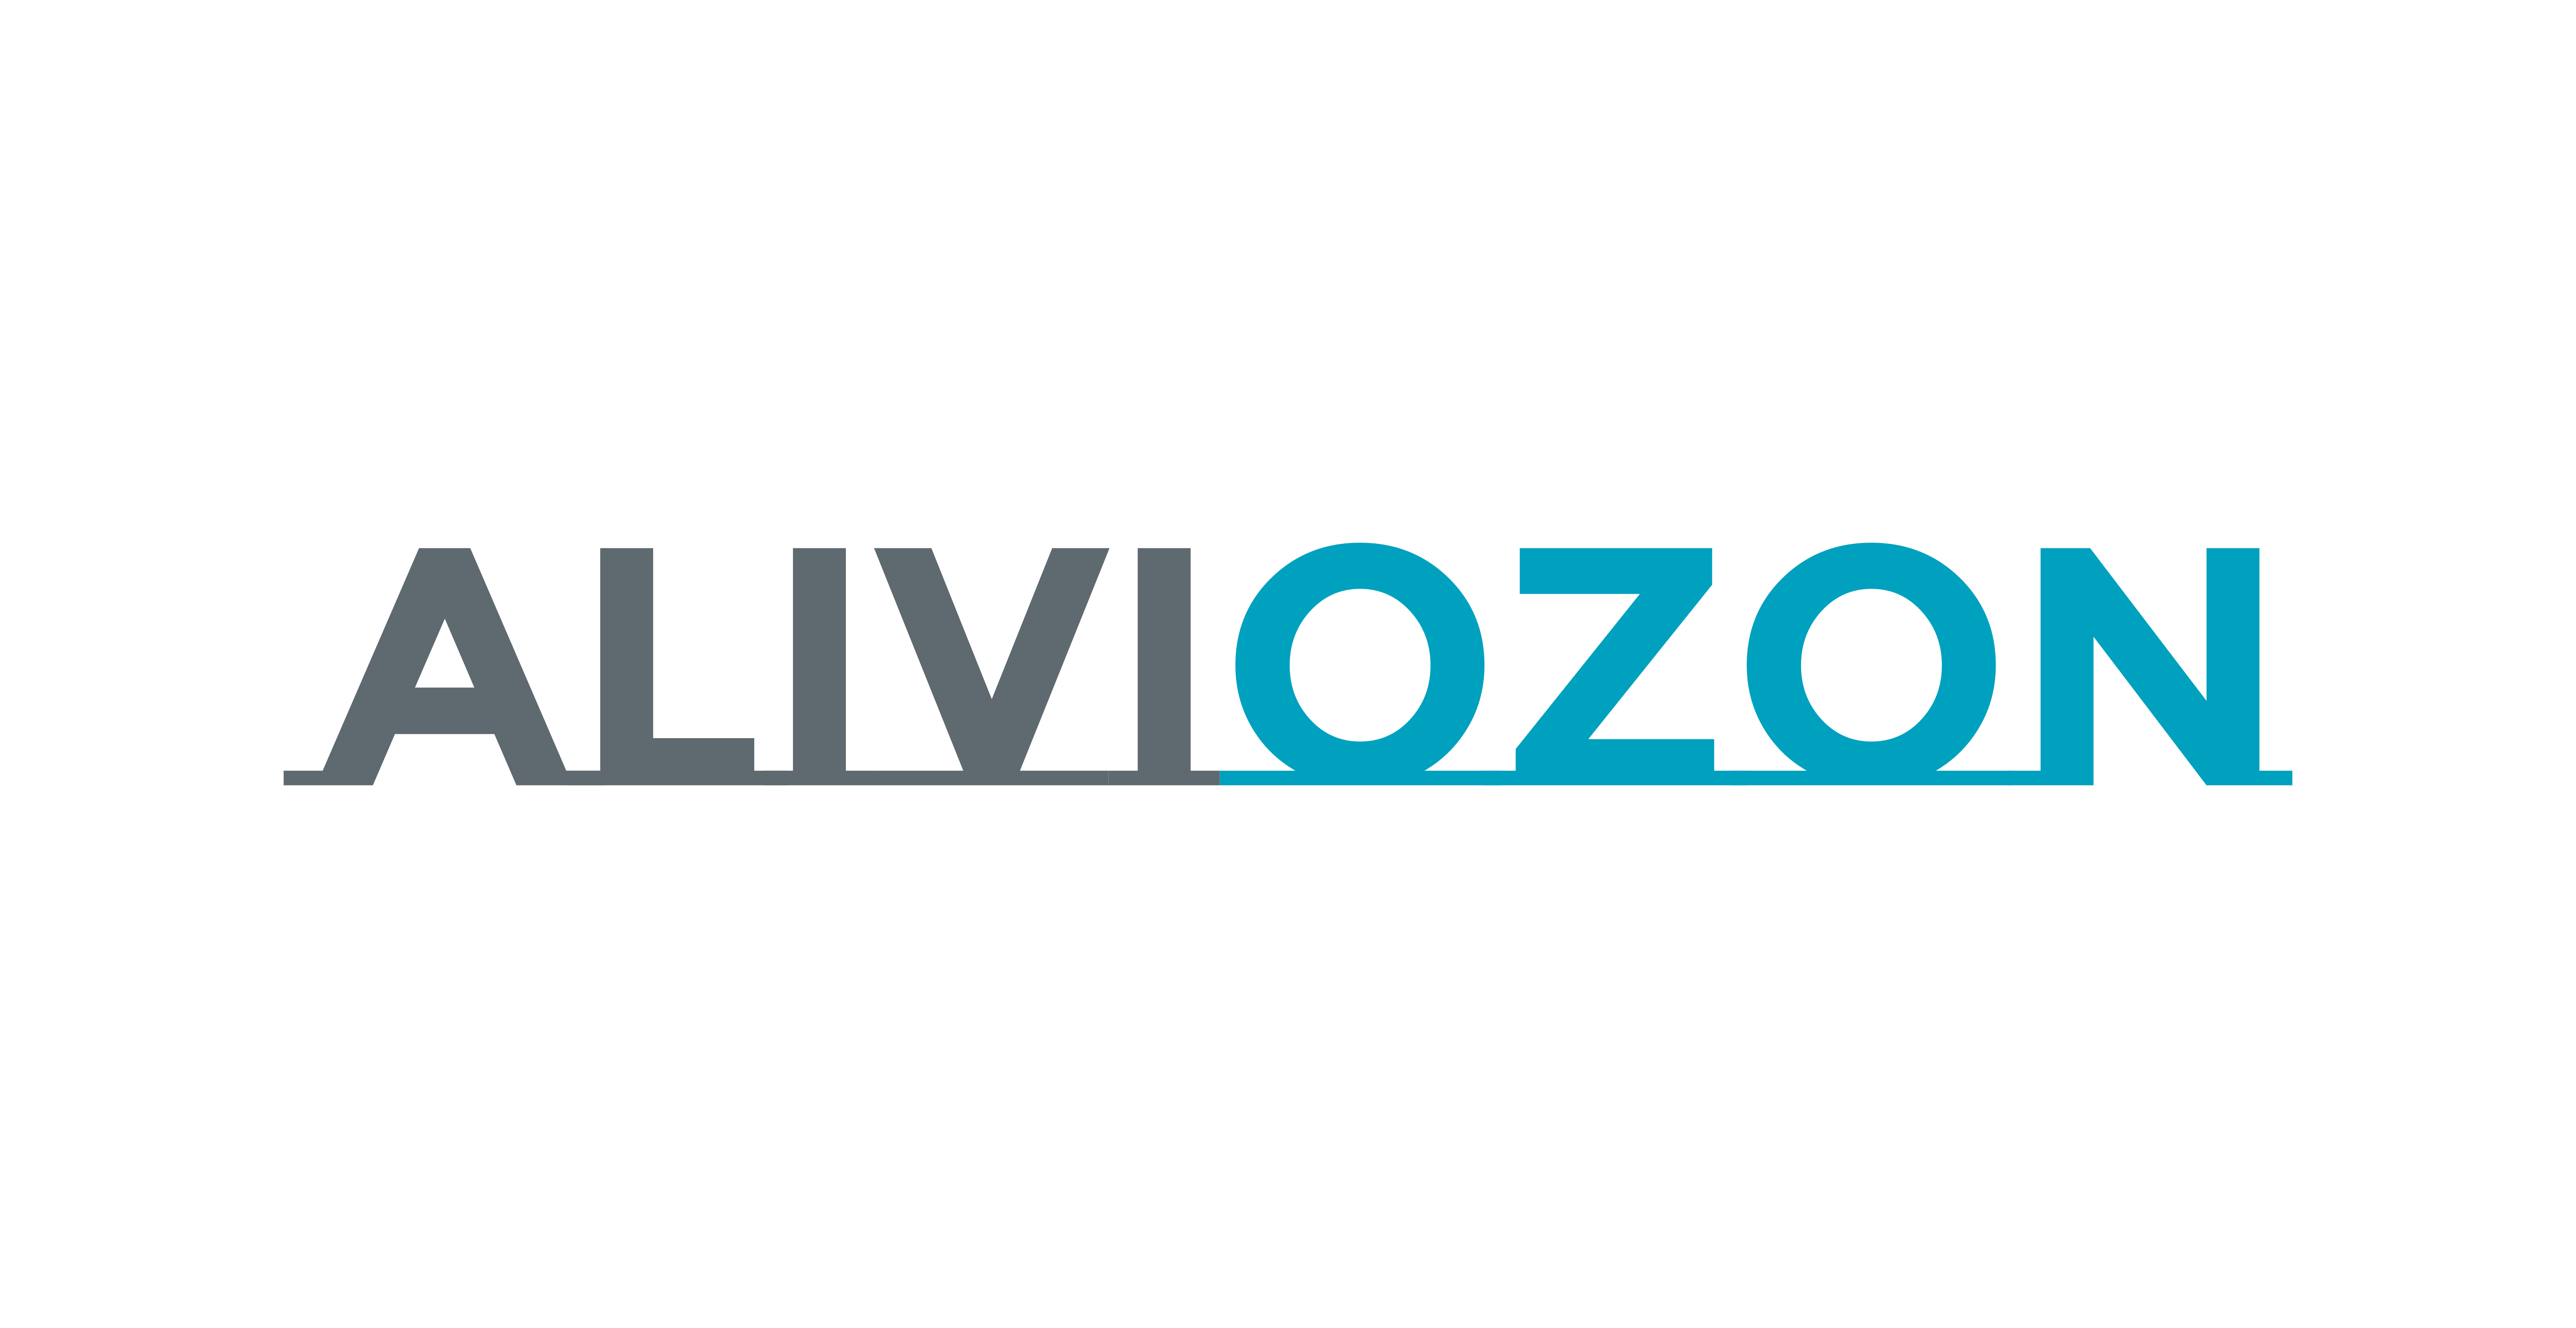 LOGO-ALIVIOZON.png